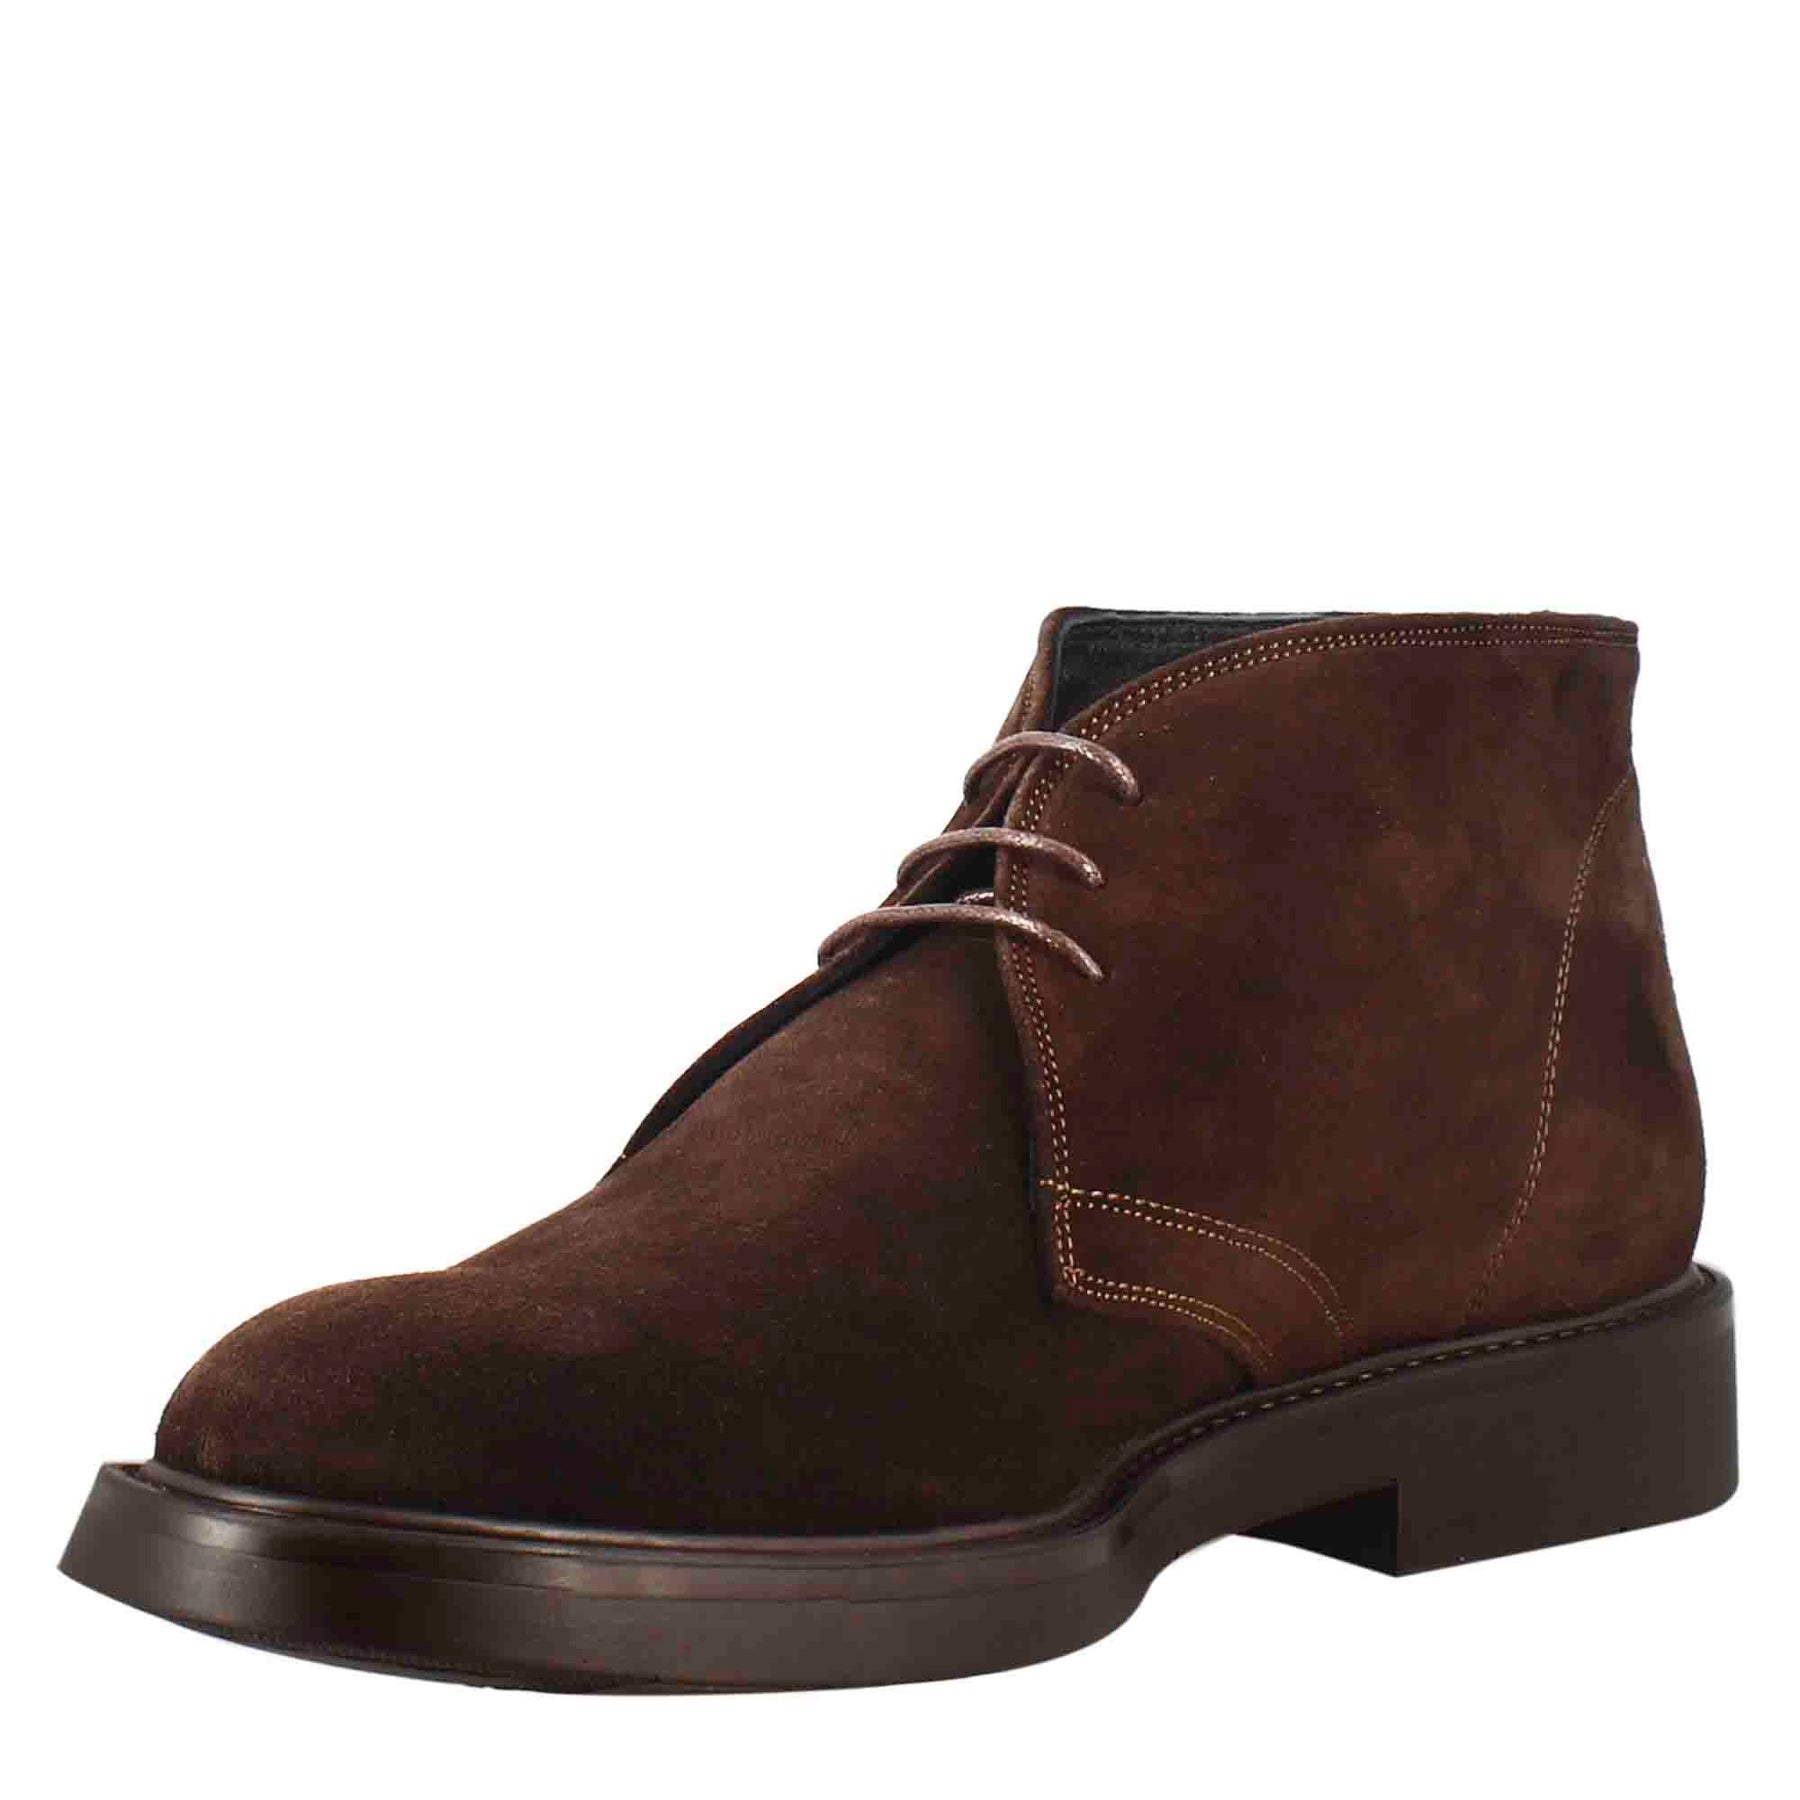 Men's ankle boot in dark brown suede